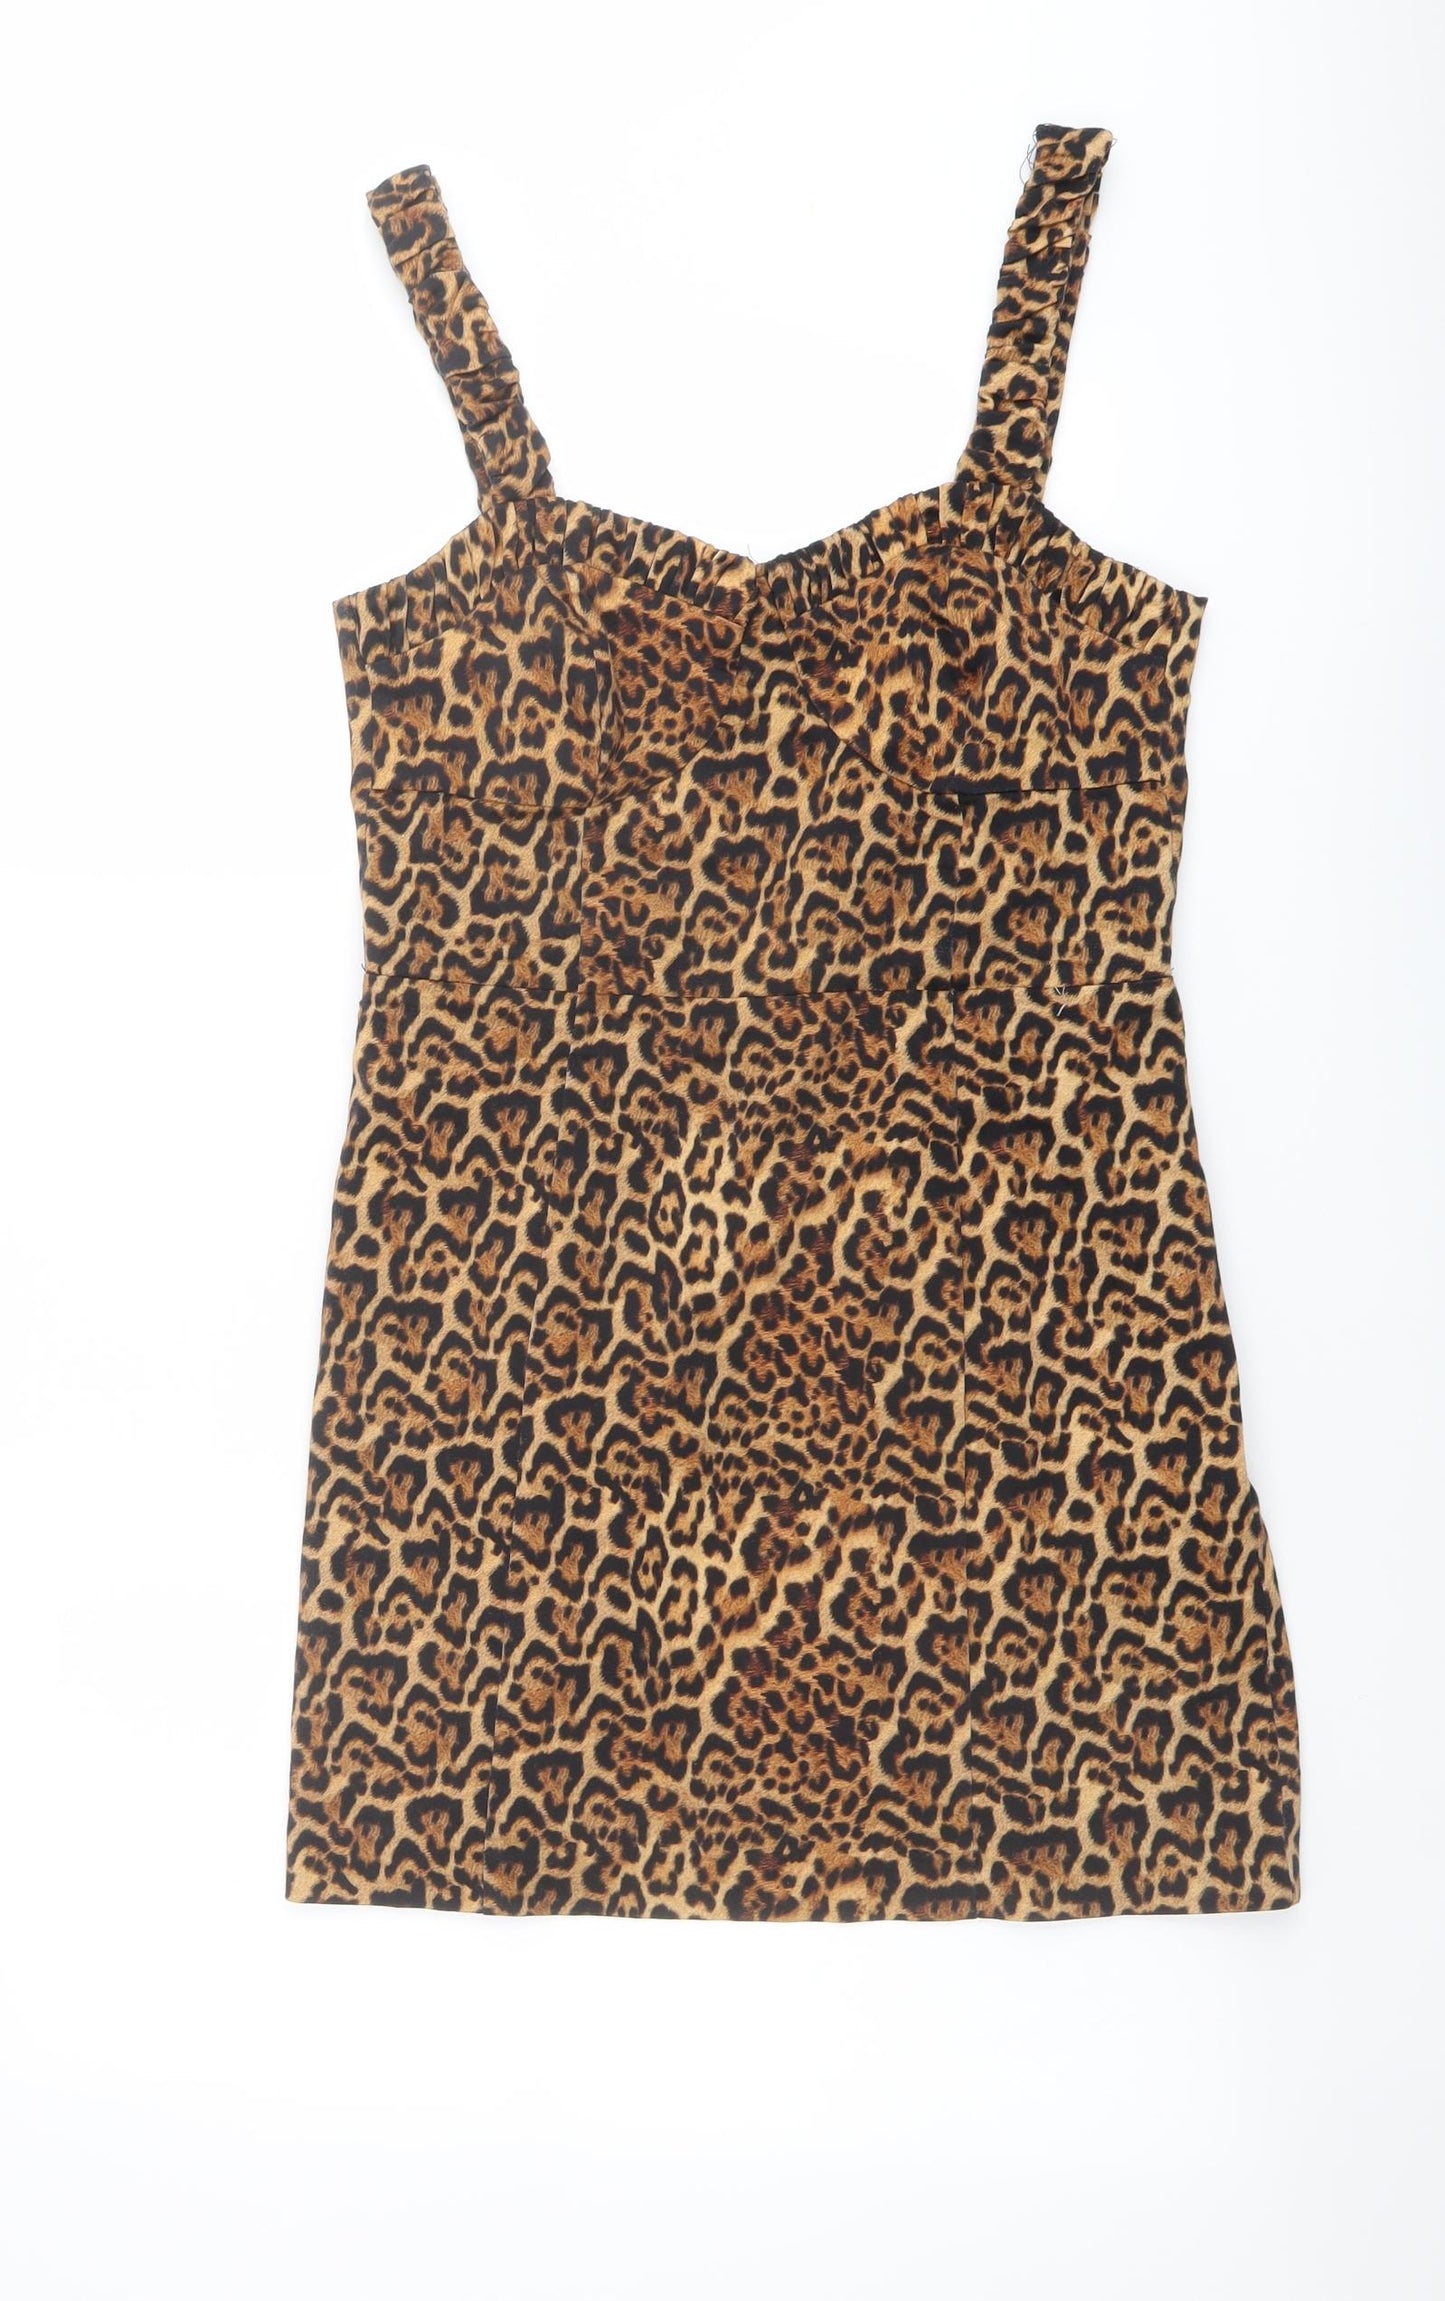 Zara Womens Brown Animal Print Cotton Bodycon Size M V-Neck Zip - Leopard pattern